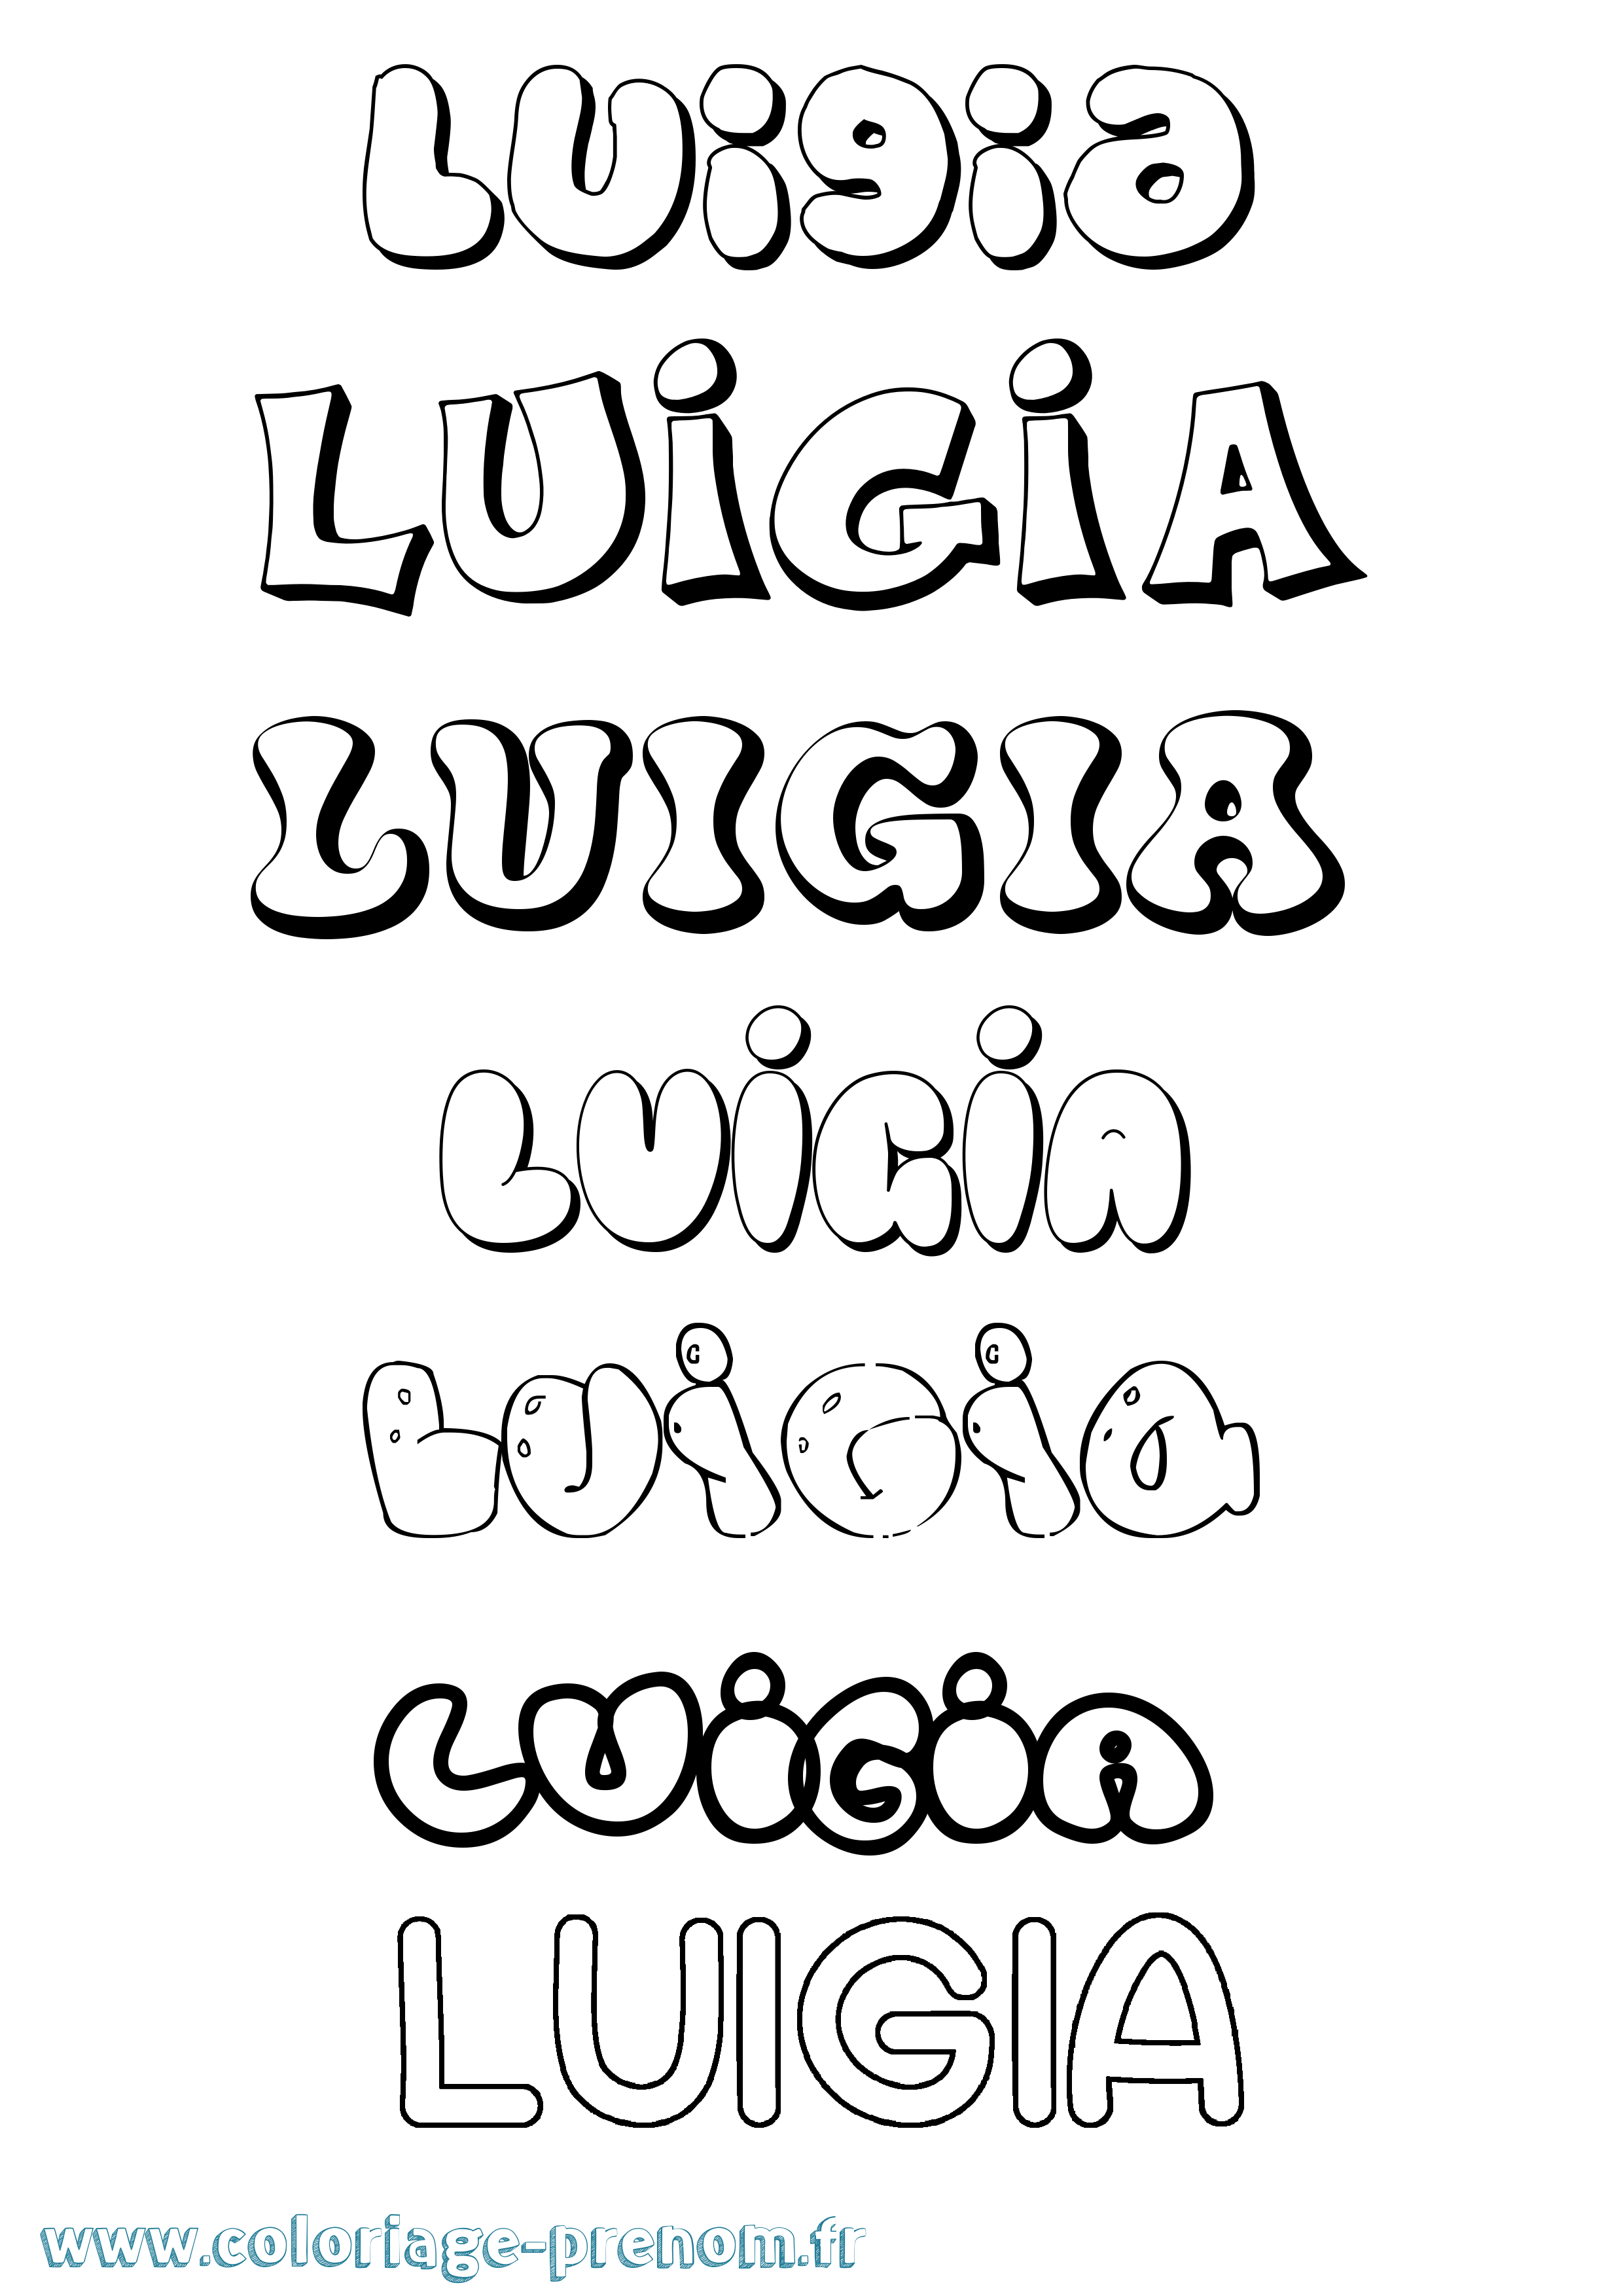 Coloriage prénom Luigia Bubble